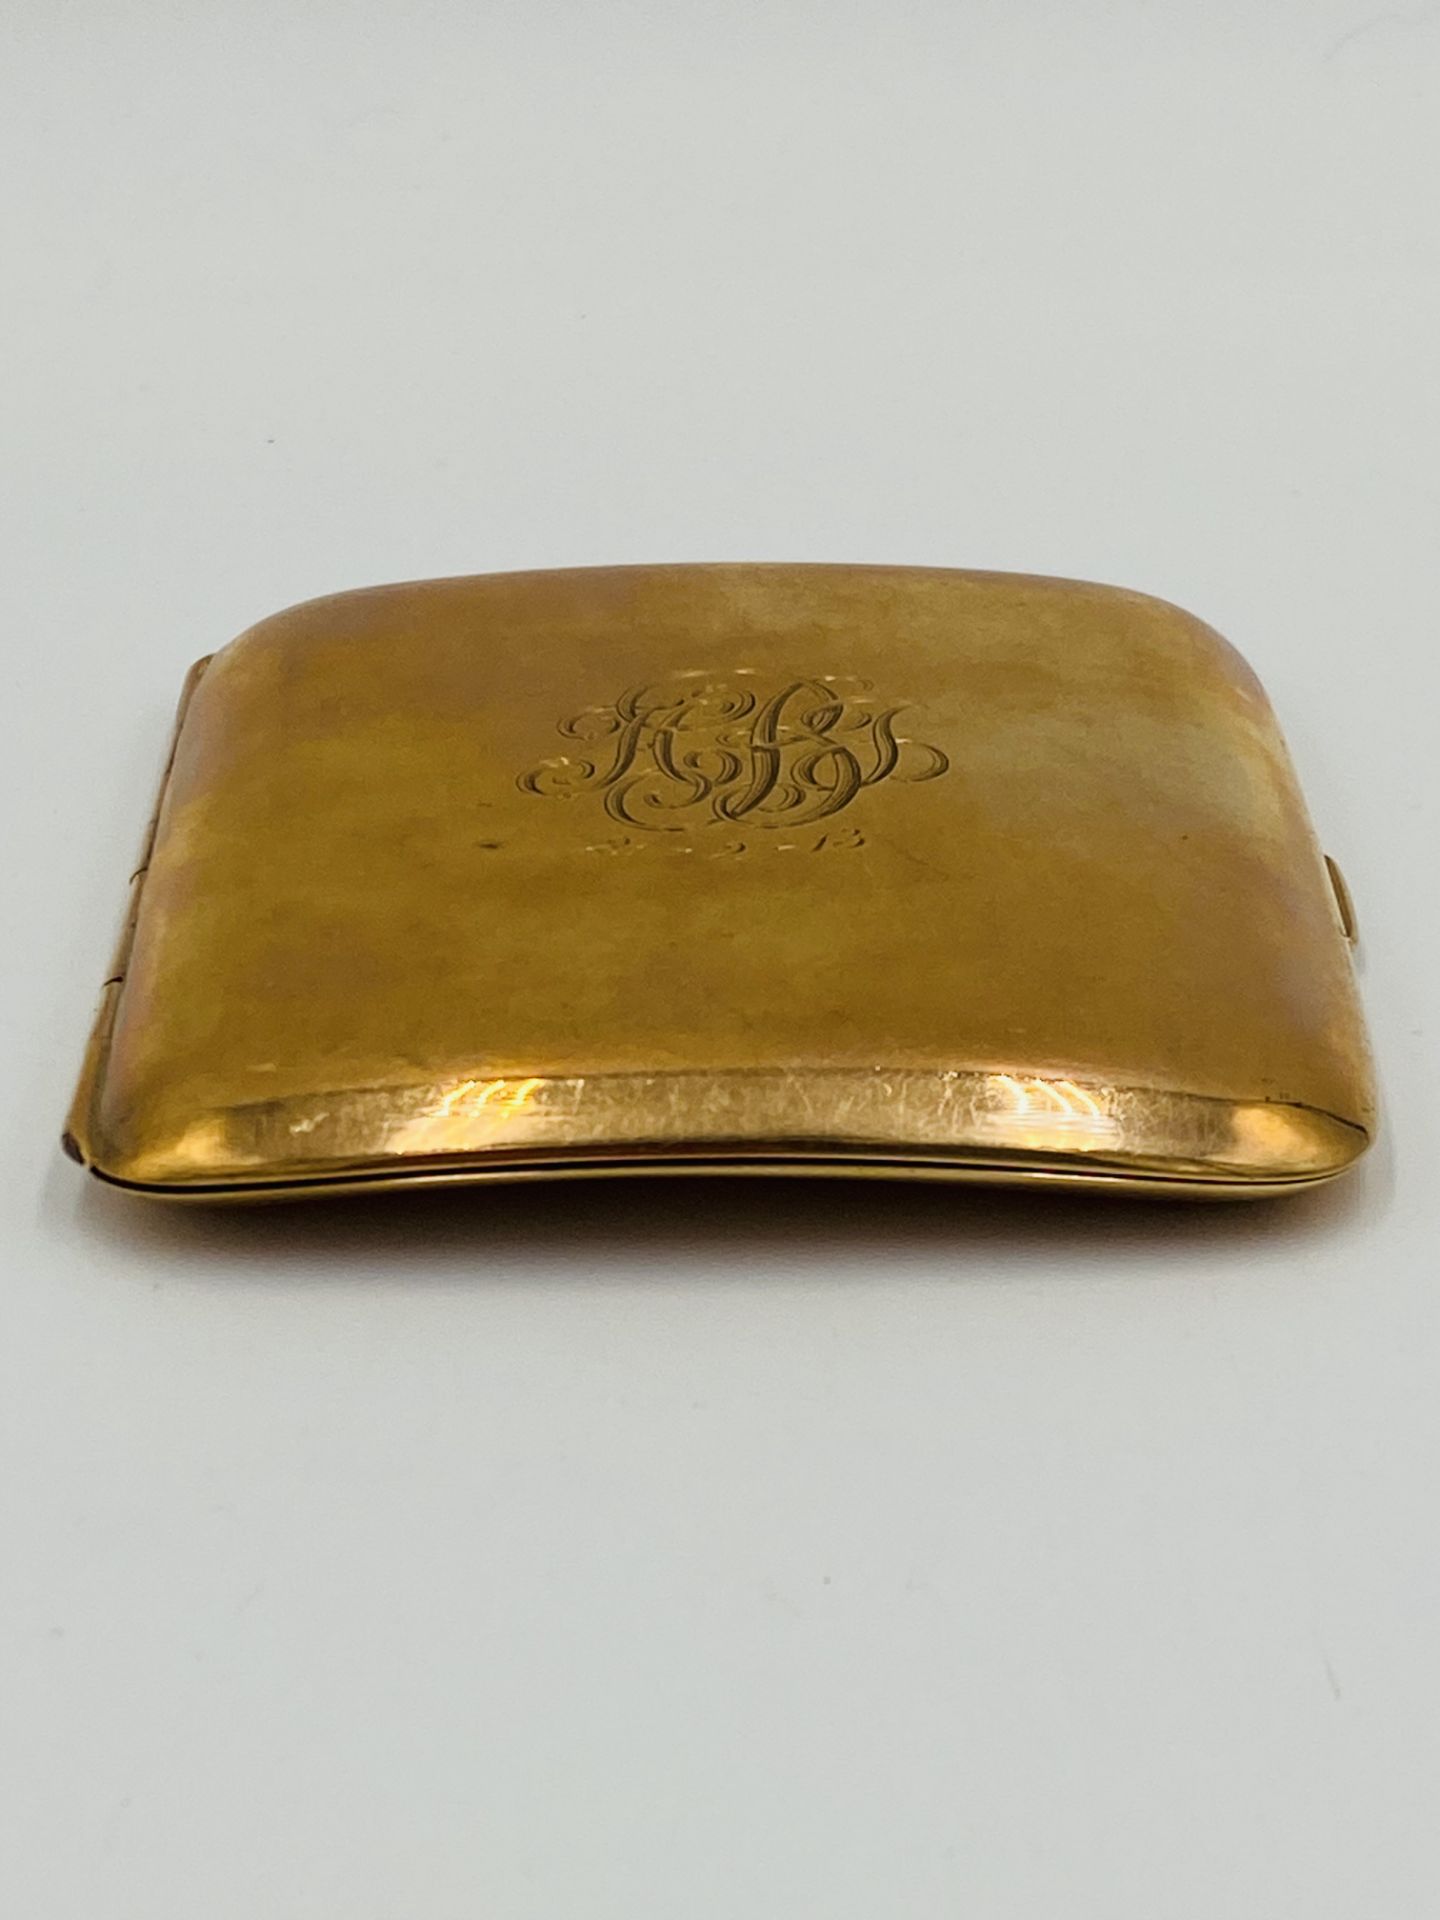 9ct gold cigarette case, 71.3g - Image 5 of 7